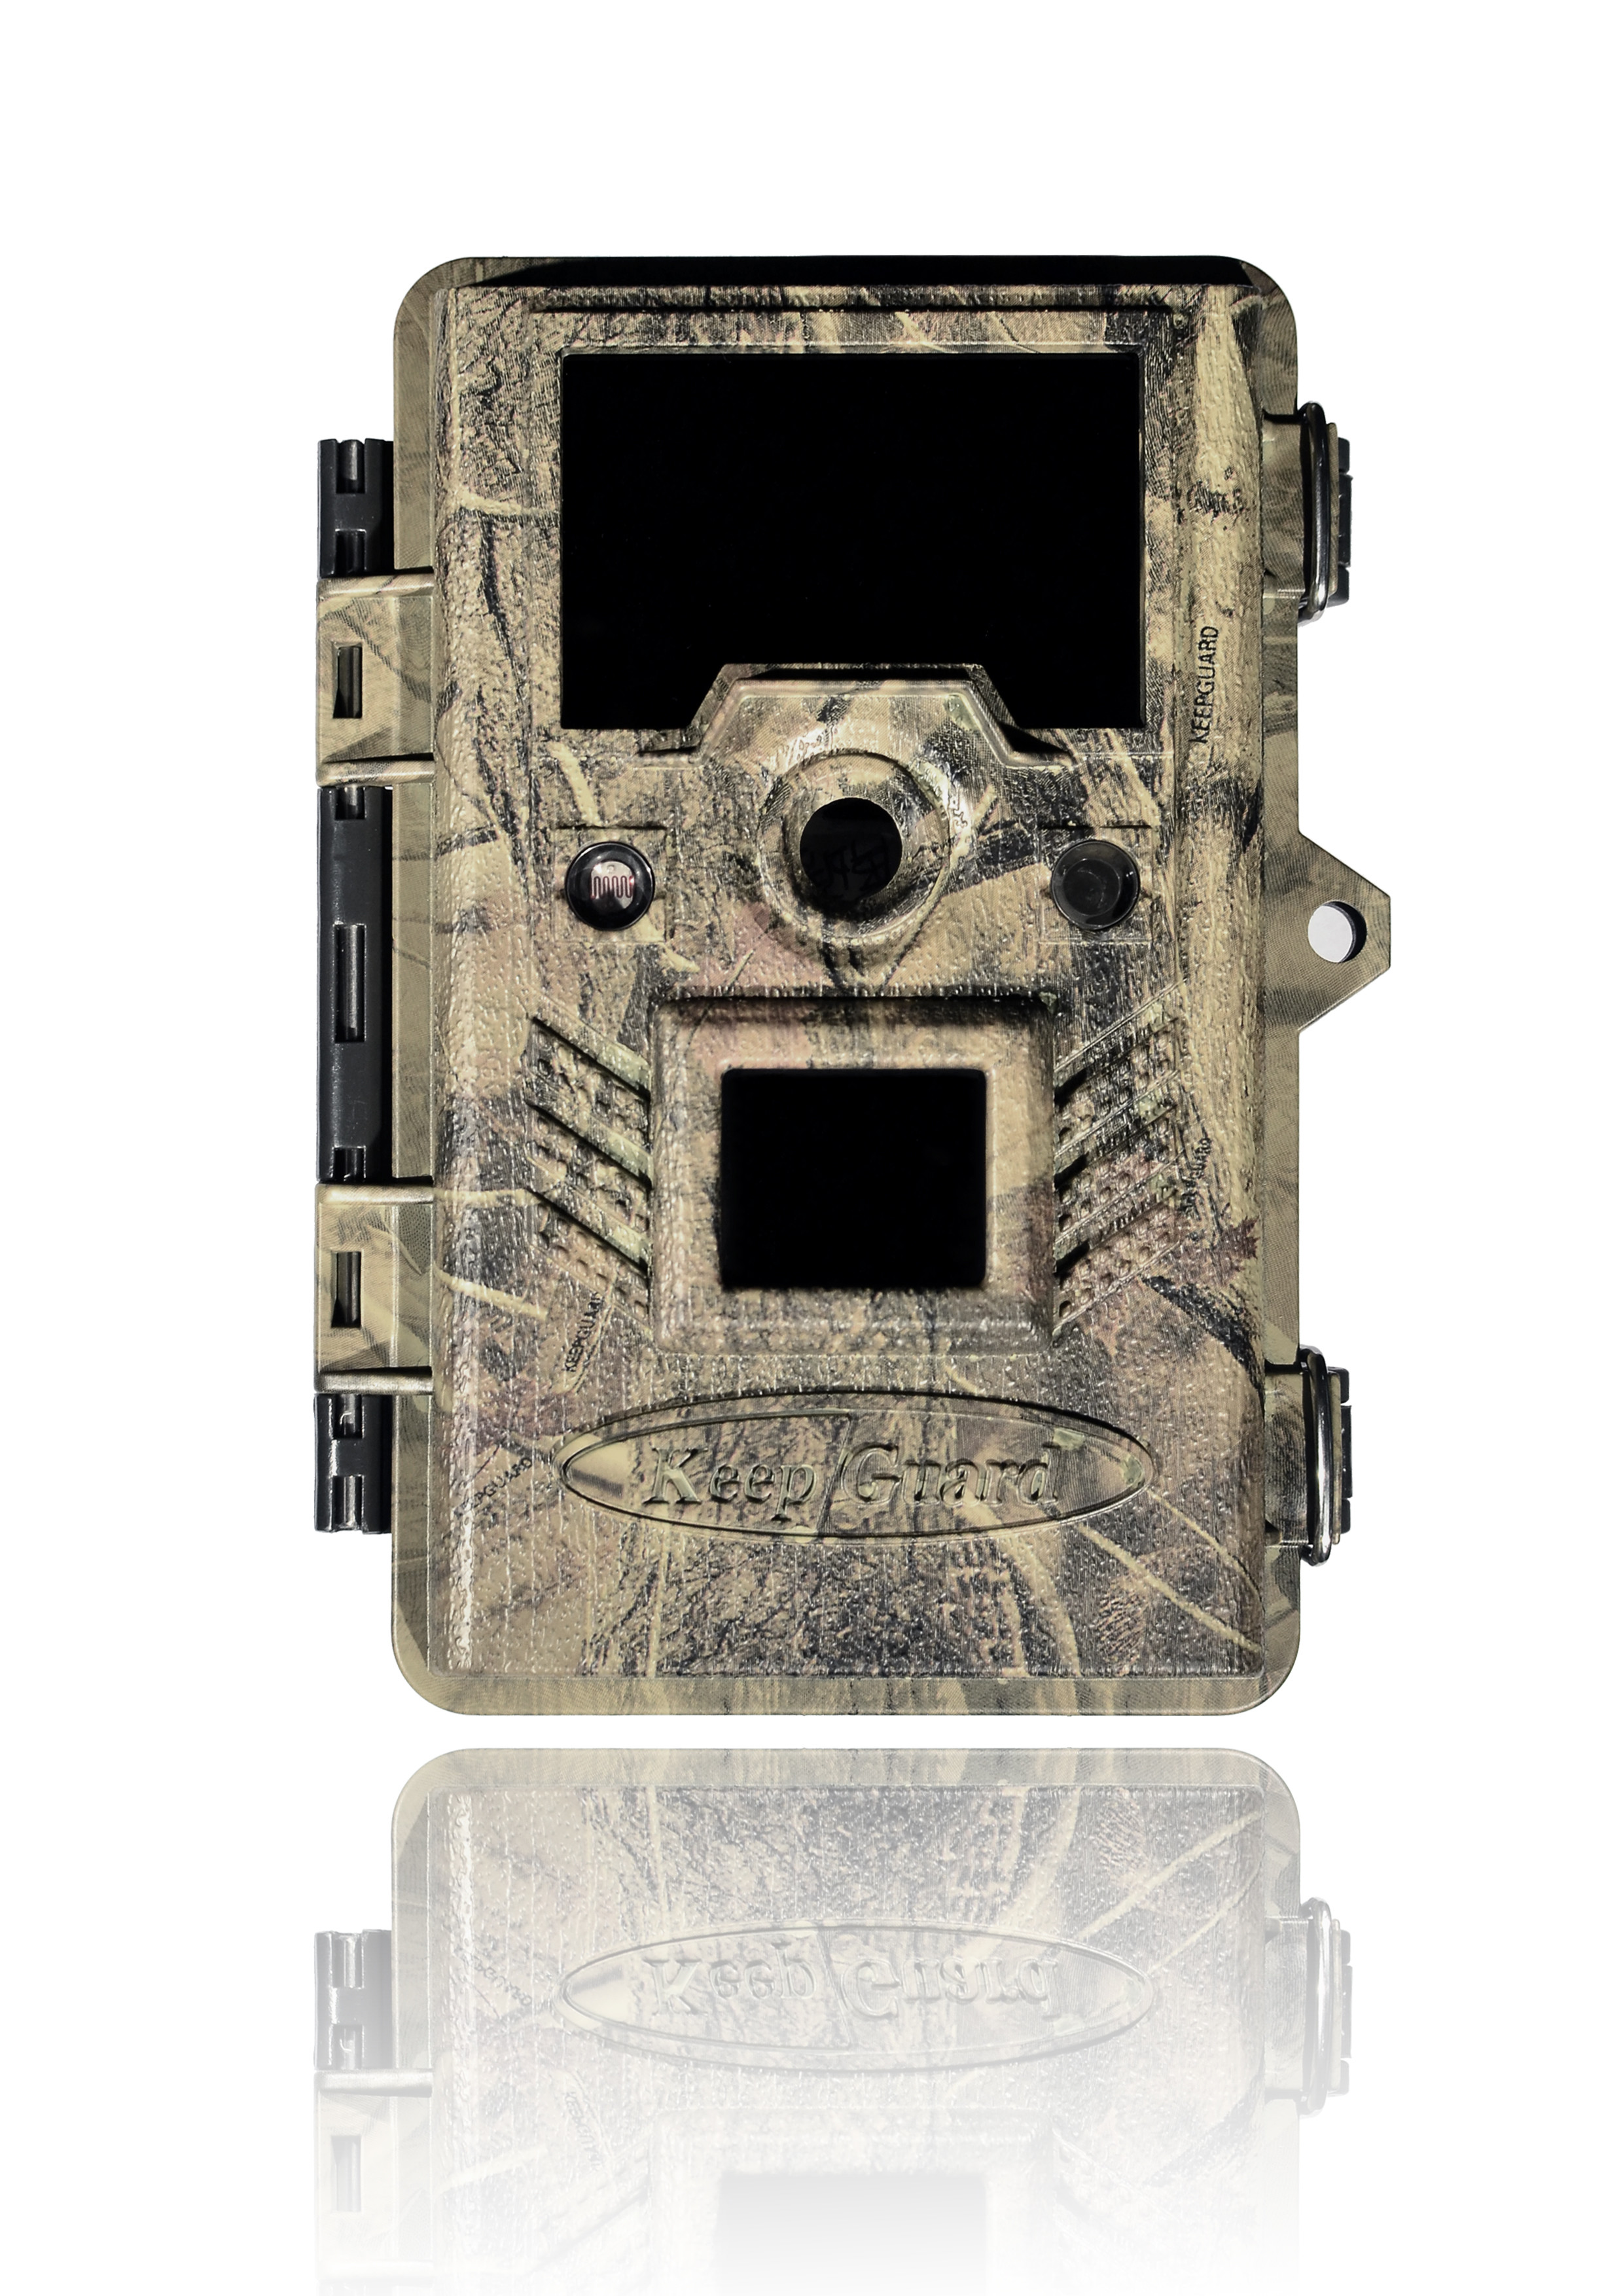 KG691 οι διόπτρες καλύπτουν την υπέρυθρη κάμερα παιχνιδιών νυχτερινής όρασης καμερών κυνηγιού